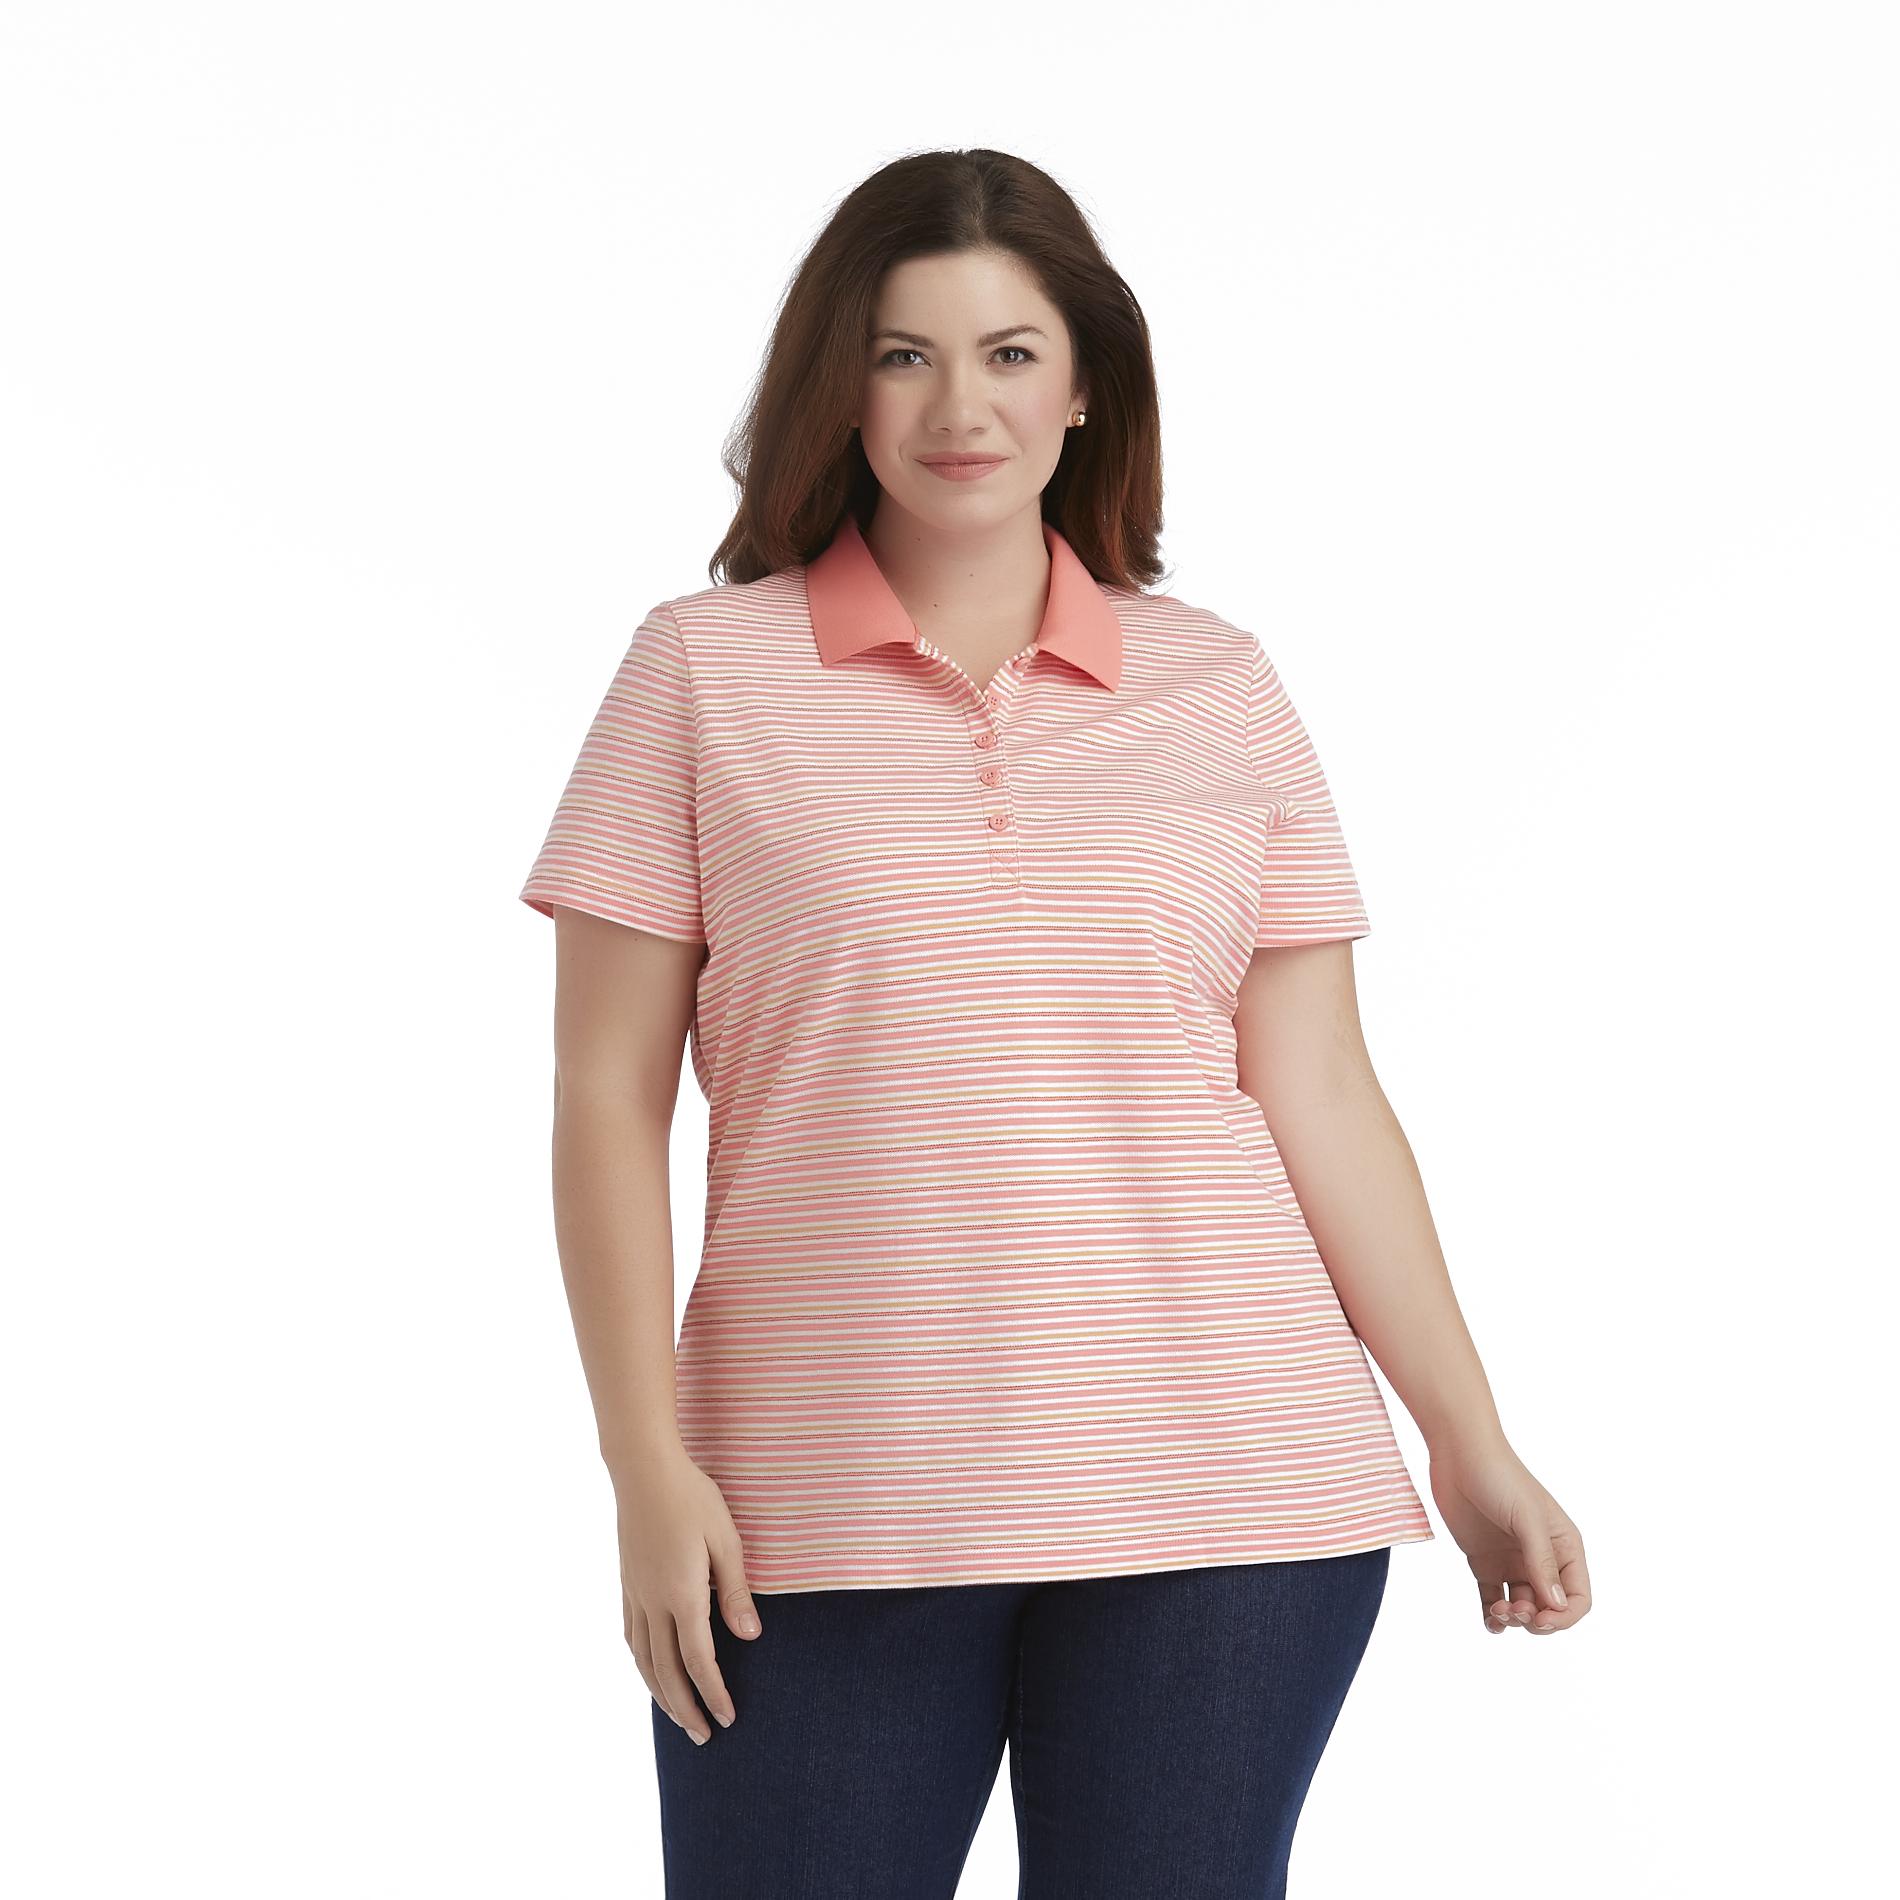 Basic Editions Women's Plus Pique Polo Shirt - Striped